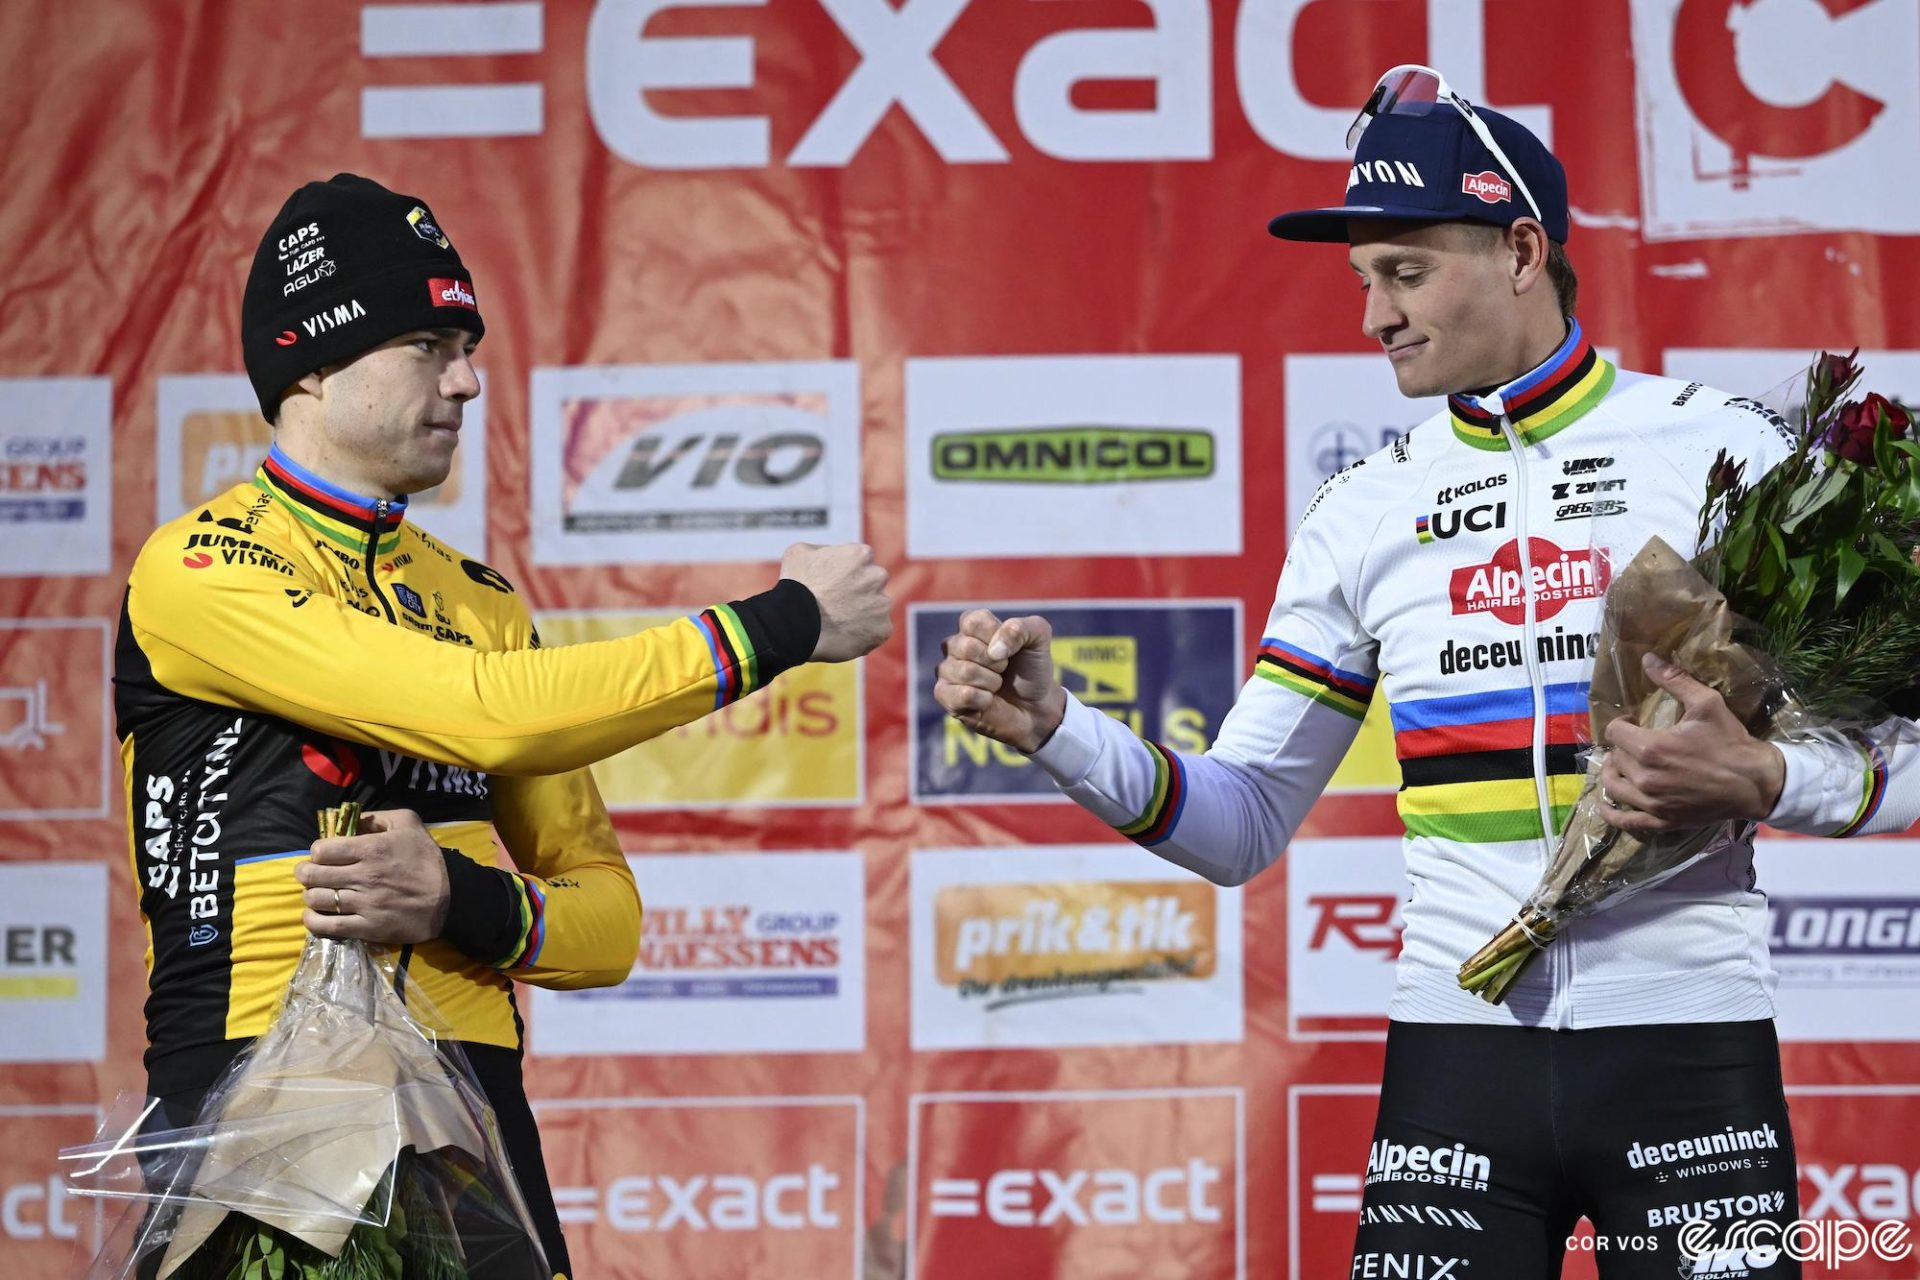 Van Aert and Van der Poel share a fist bump on the podium. Van Aert has an unreadable expresion while Van der Poel is slightly smiling.